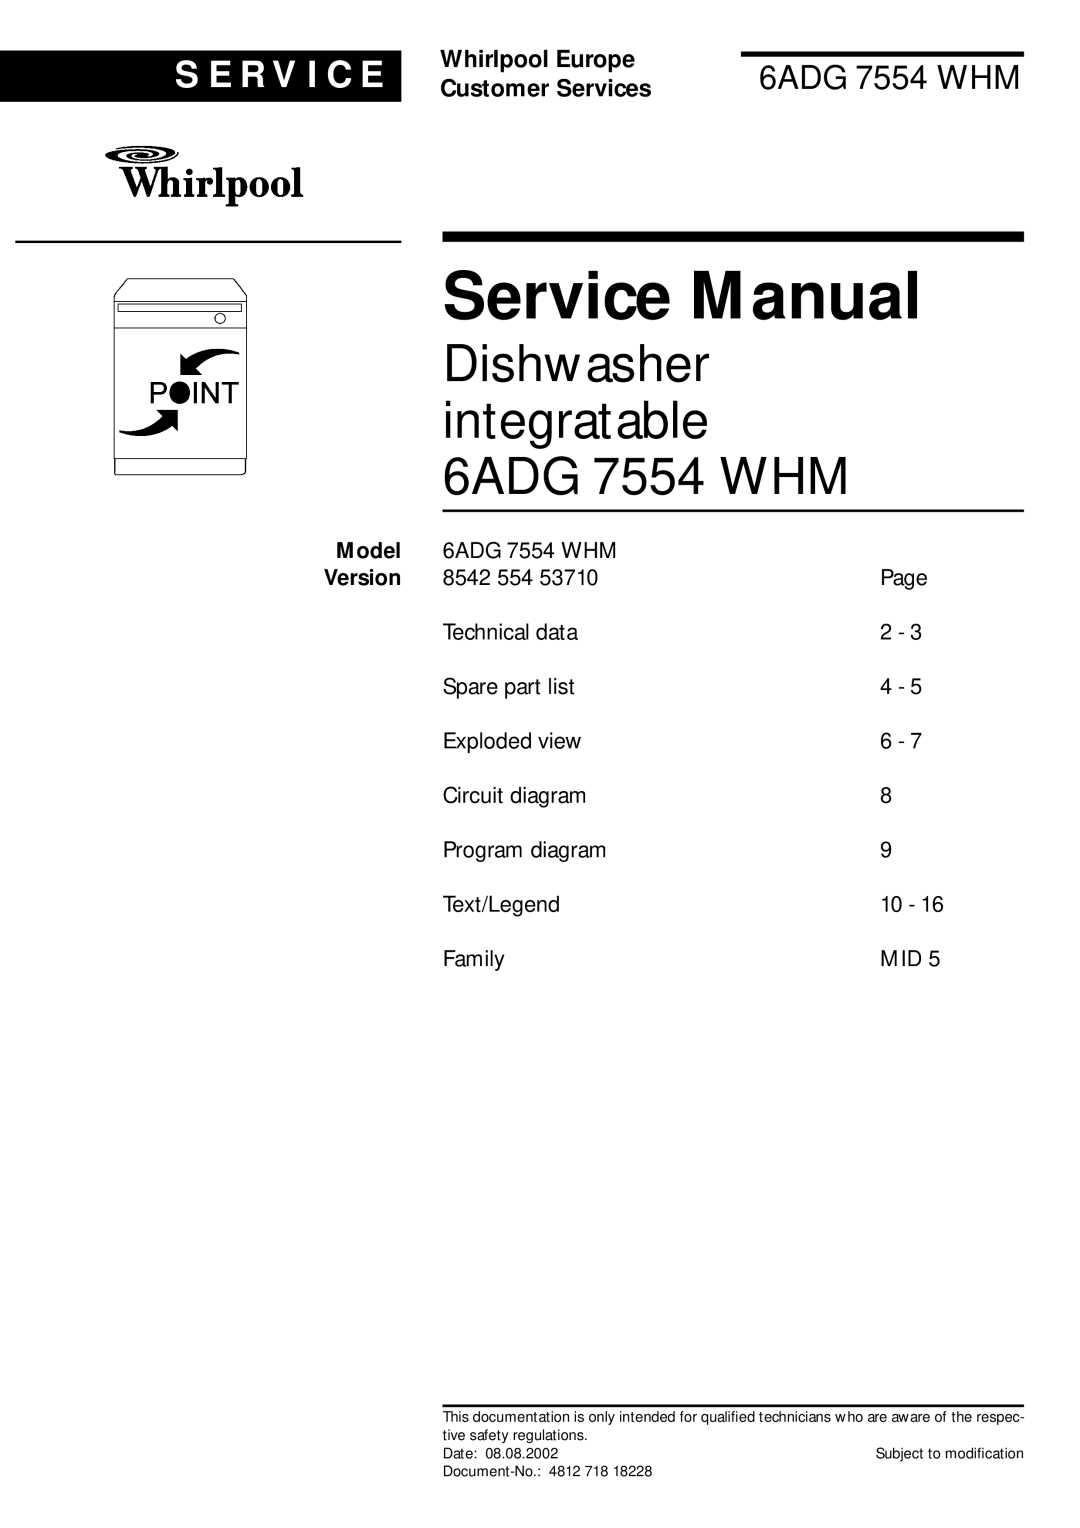 Whirlpool service manual Model, Dishwasher integratable 6ADG 7554 WHM, S E R V I C E, Whirlpool Europe 